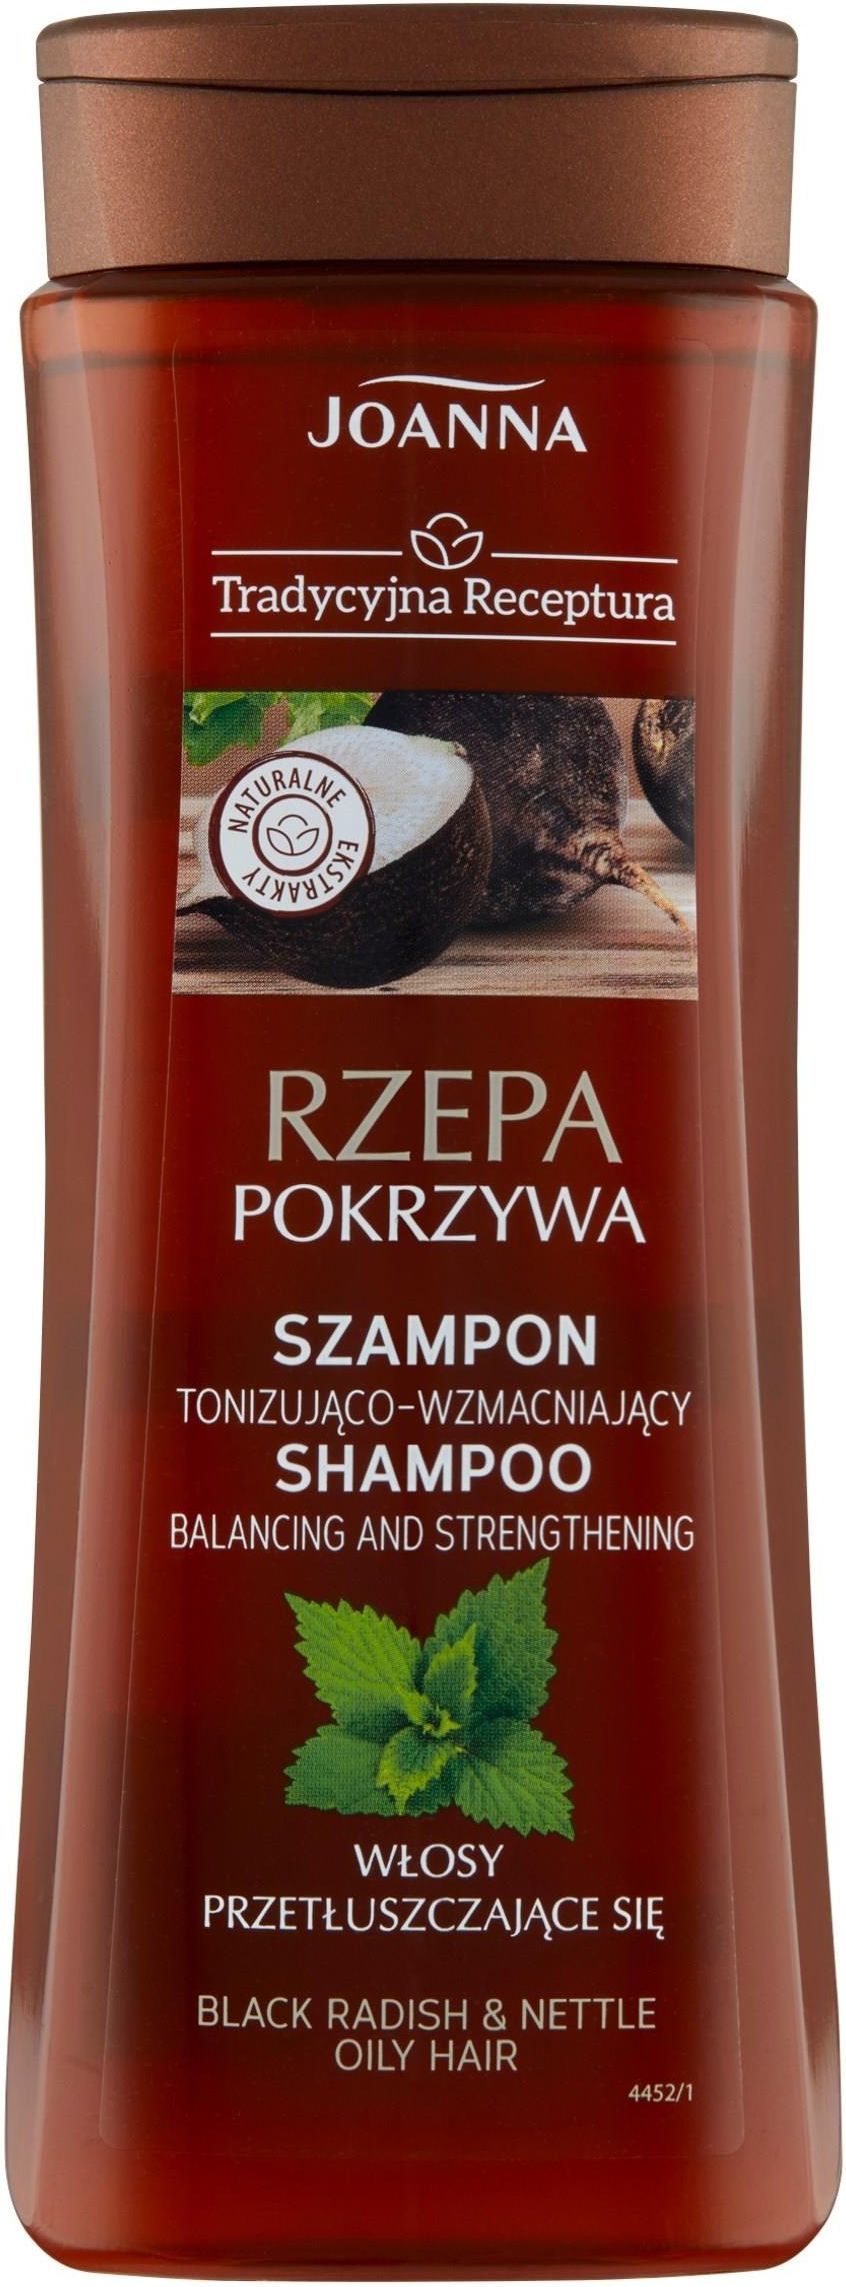 szampon receptura